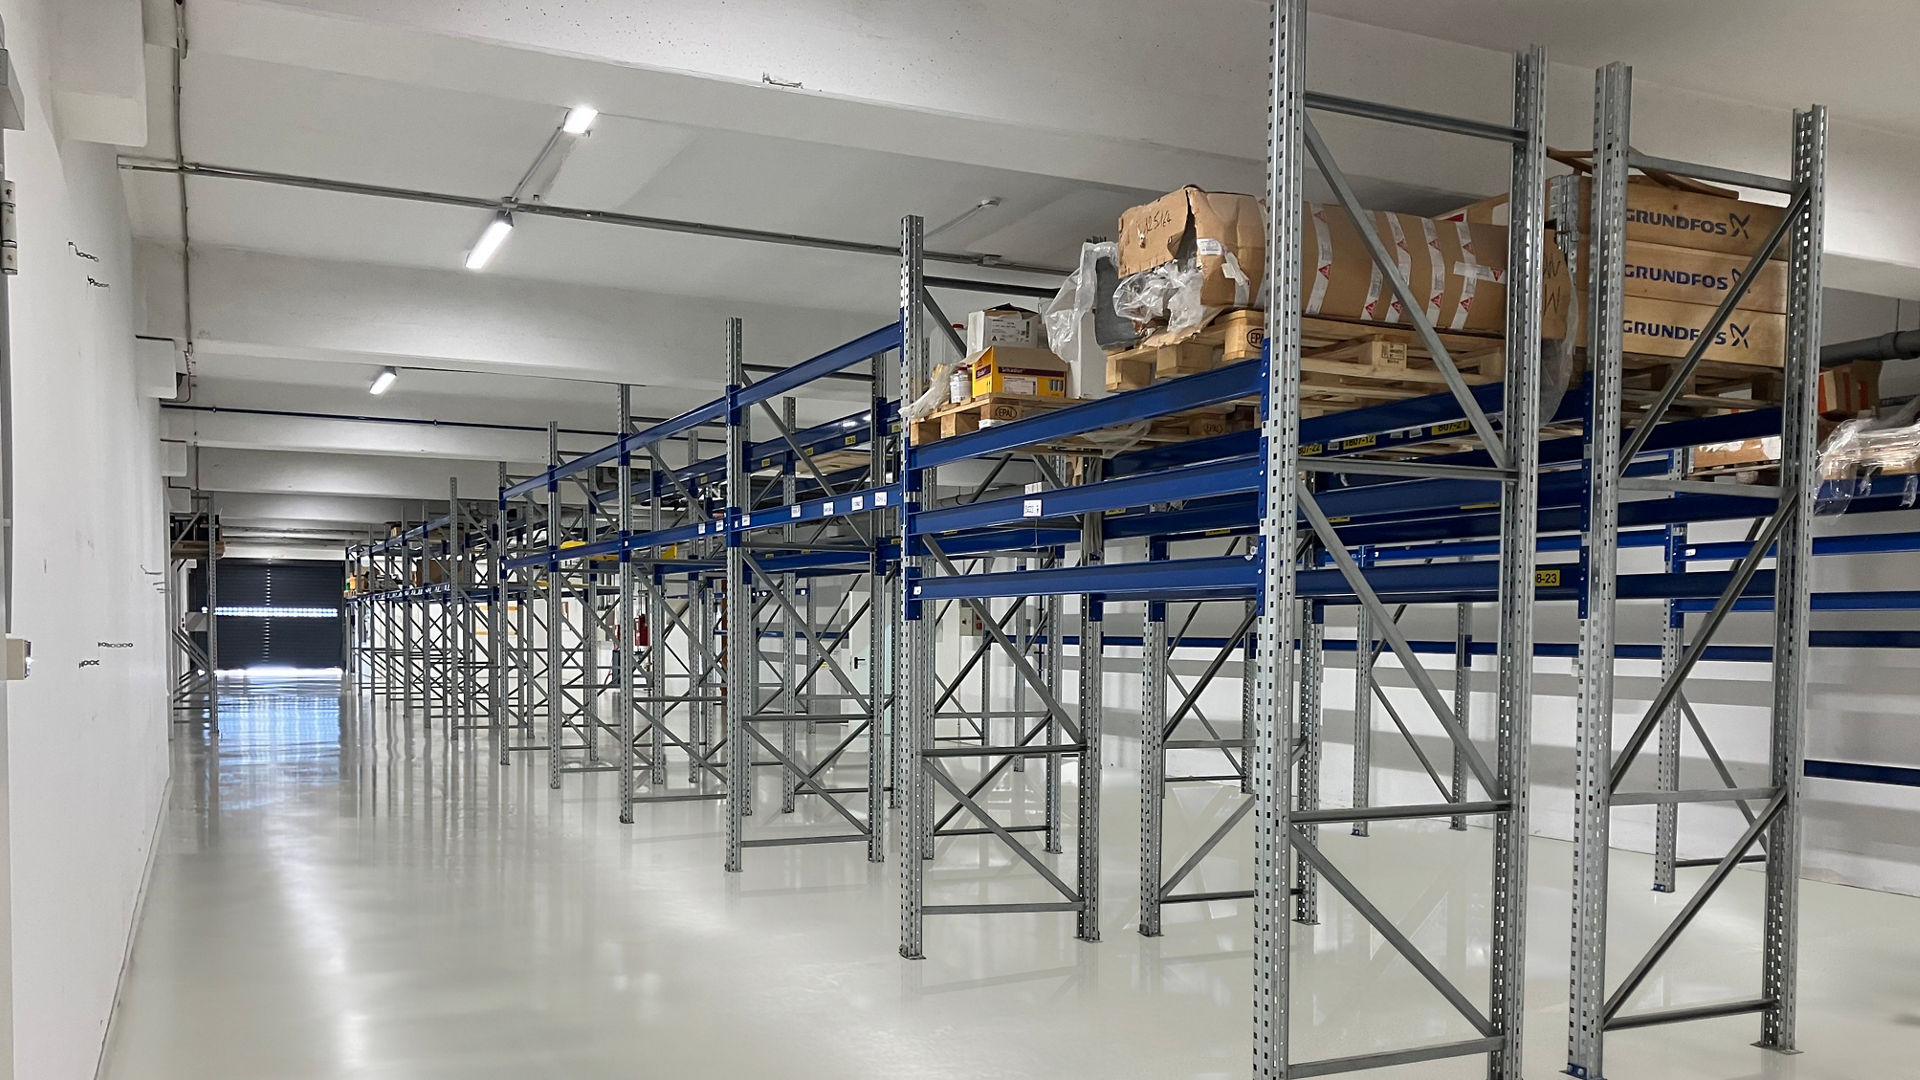 Grey floor in storage warehouse facility